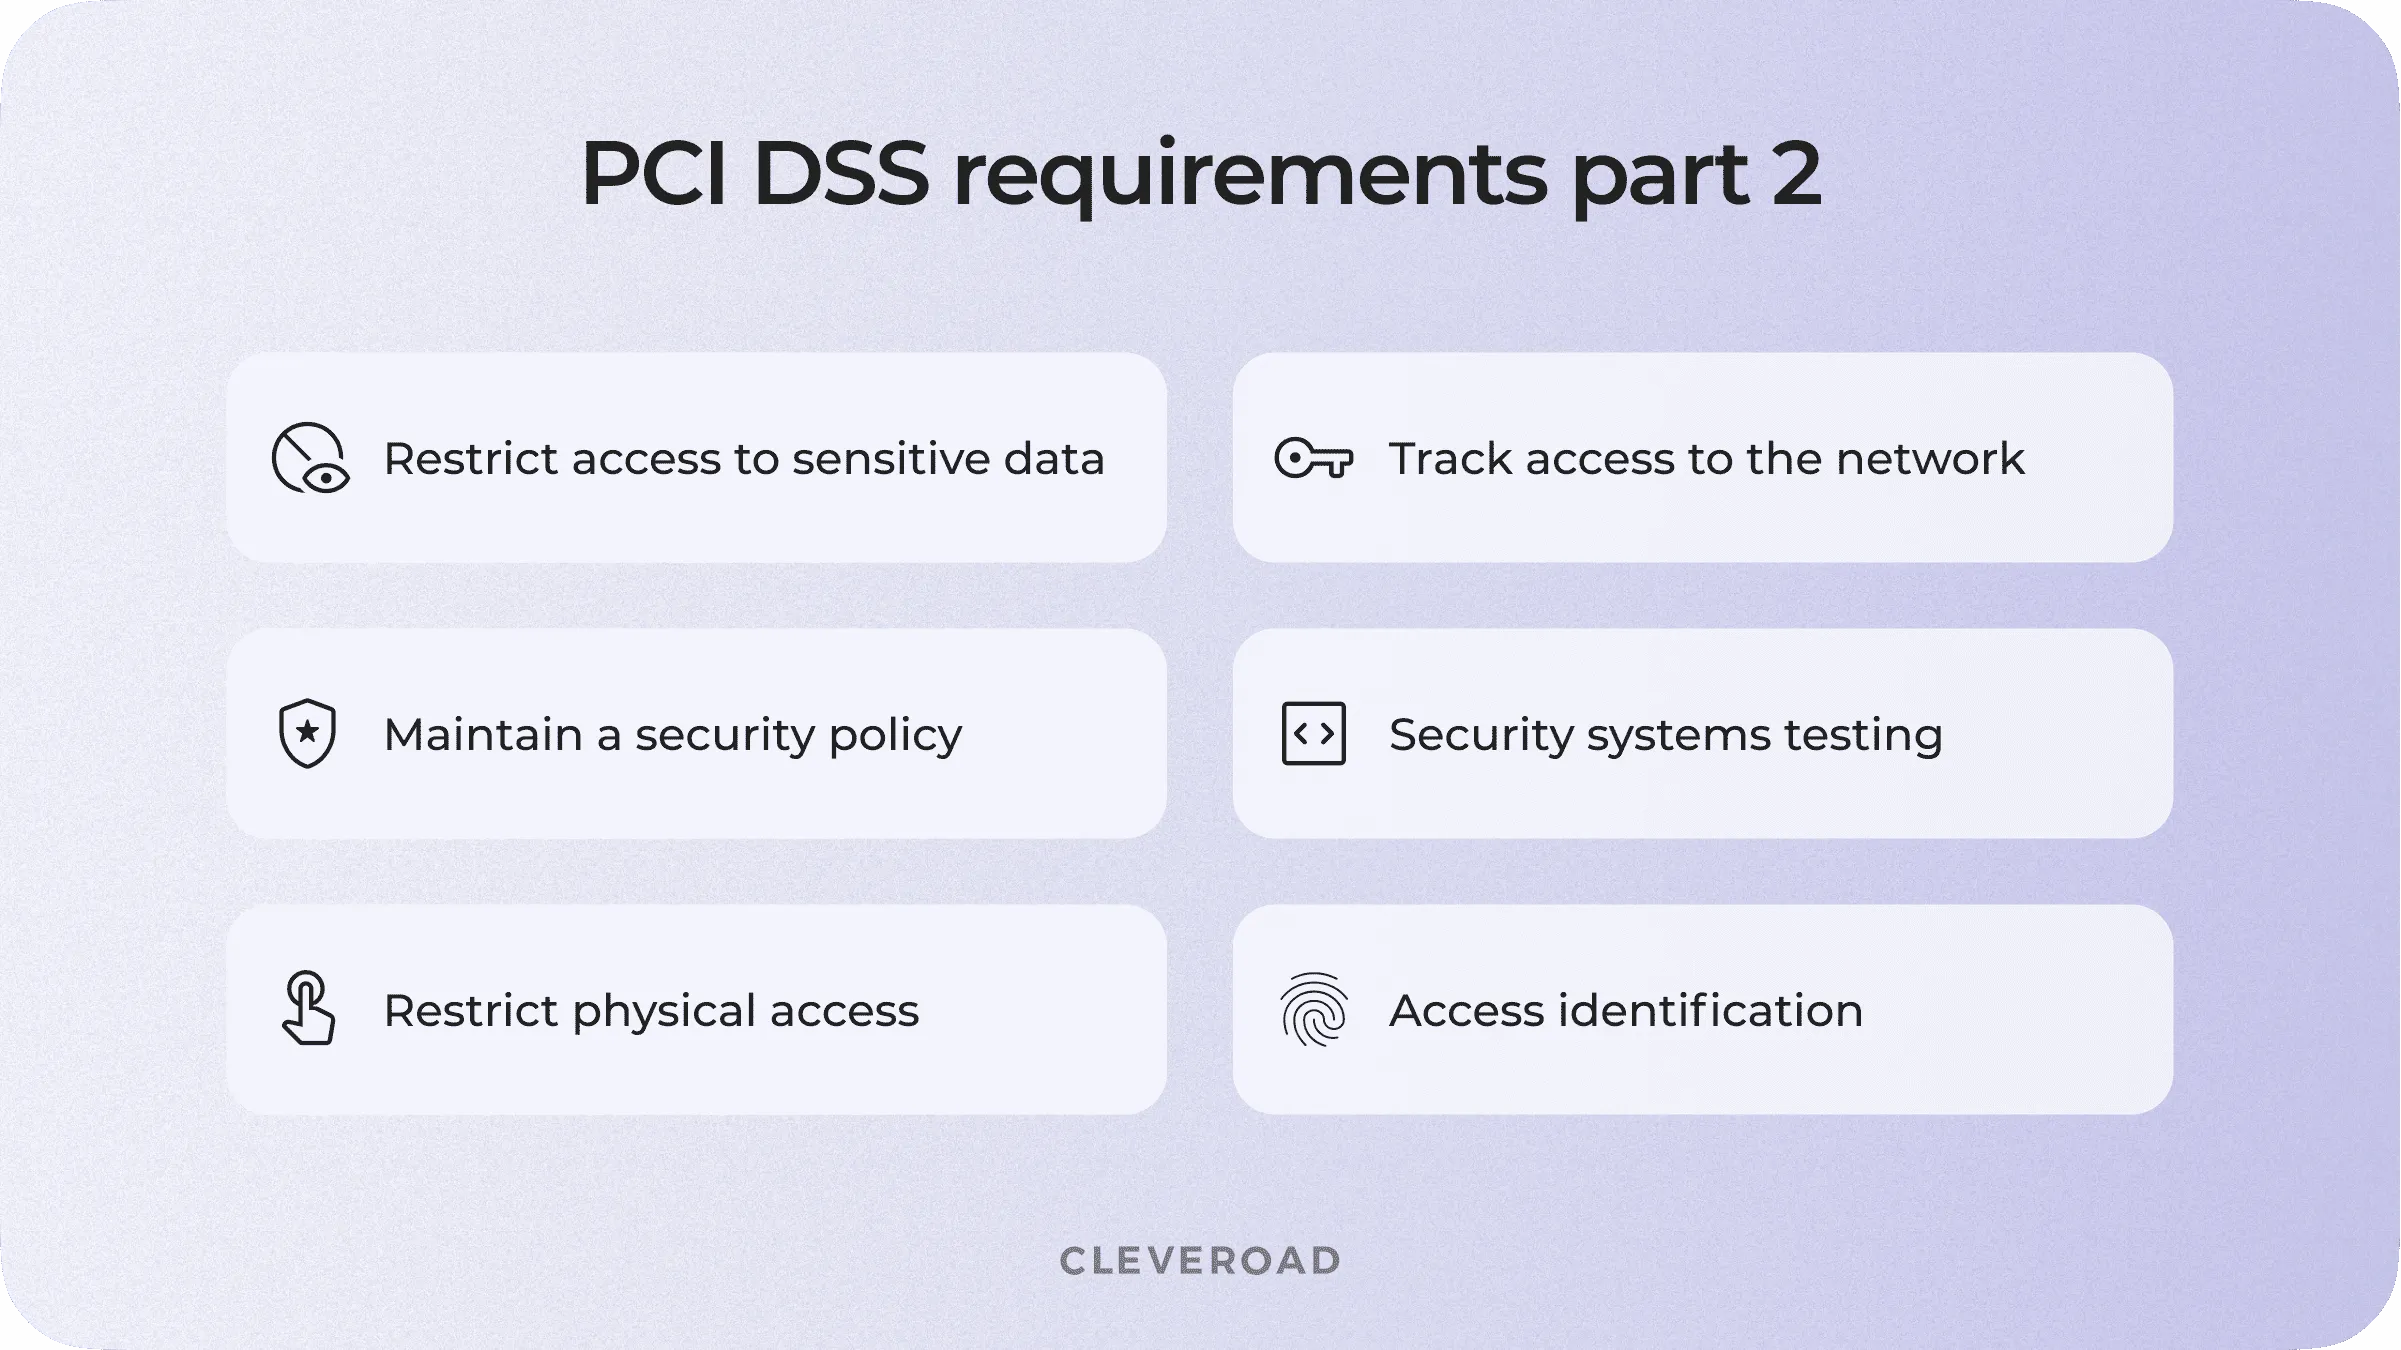 PCI DSS regulations